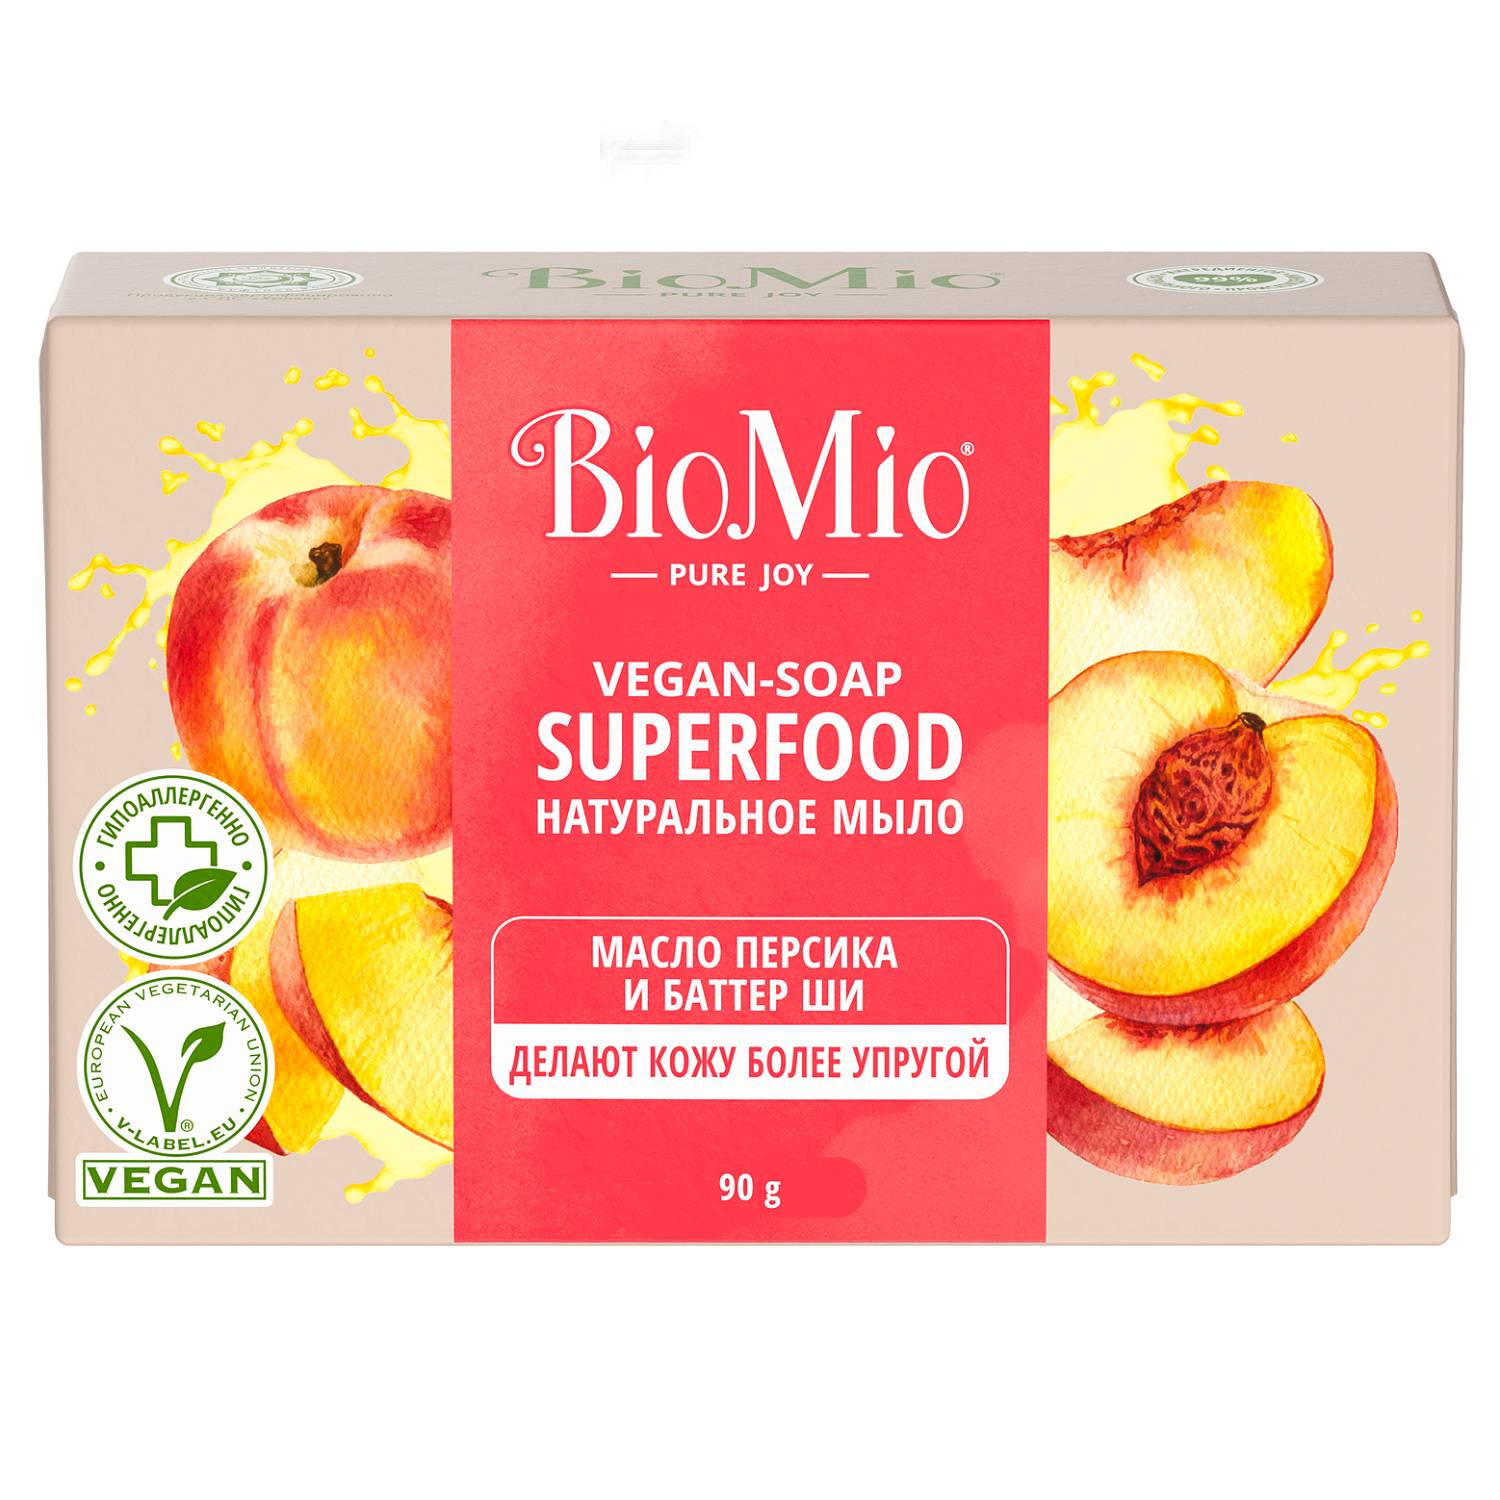 BioMio Натуральное мыло Персик и ши Vegan Soap Superfood, 90 г (BioMio, Мыло) biomio натуральное мыло инжир и кокос vegan soap superfood 90 г biomio мыло